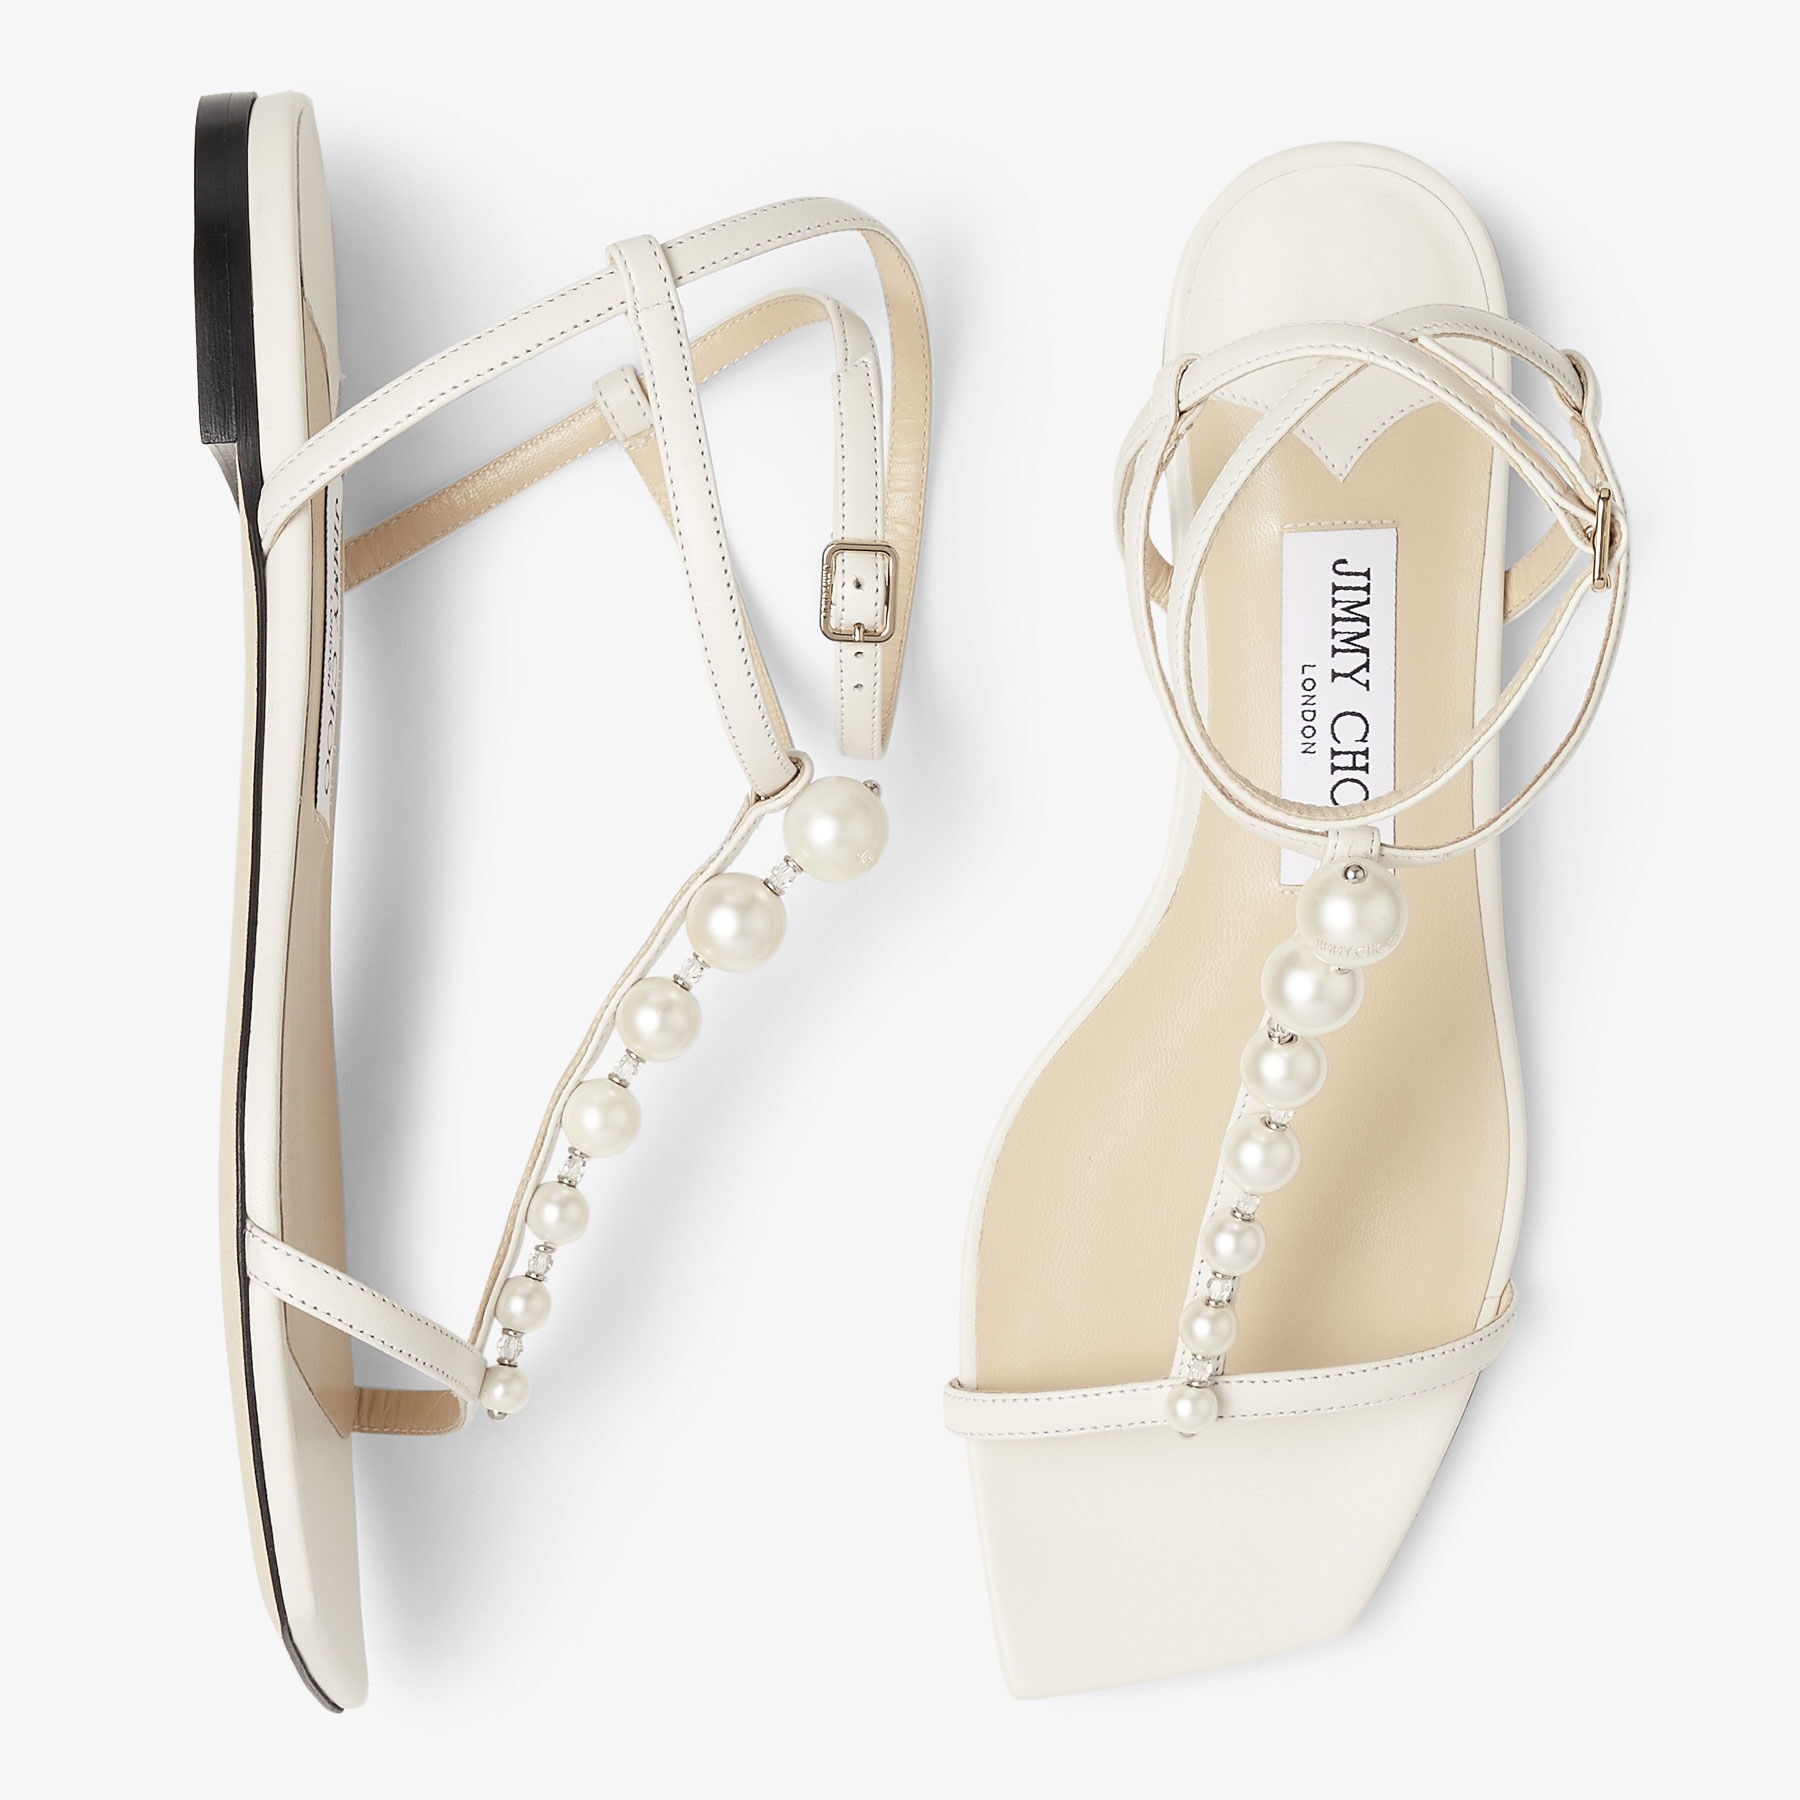 Amari Flat
Latte Nappa Leather Flat Sandals with Pearls - 5